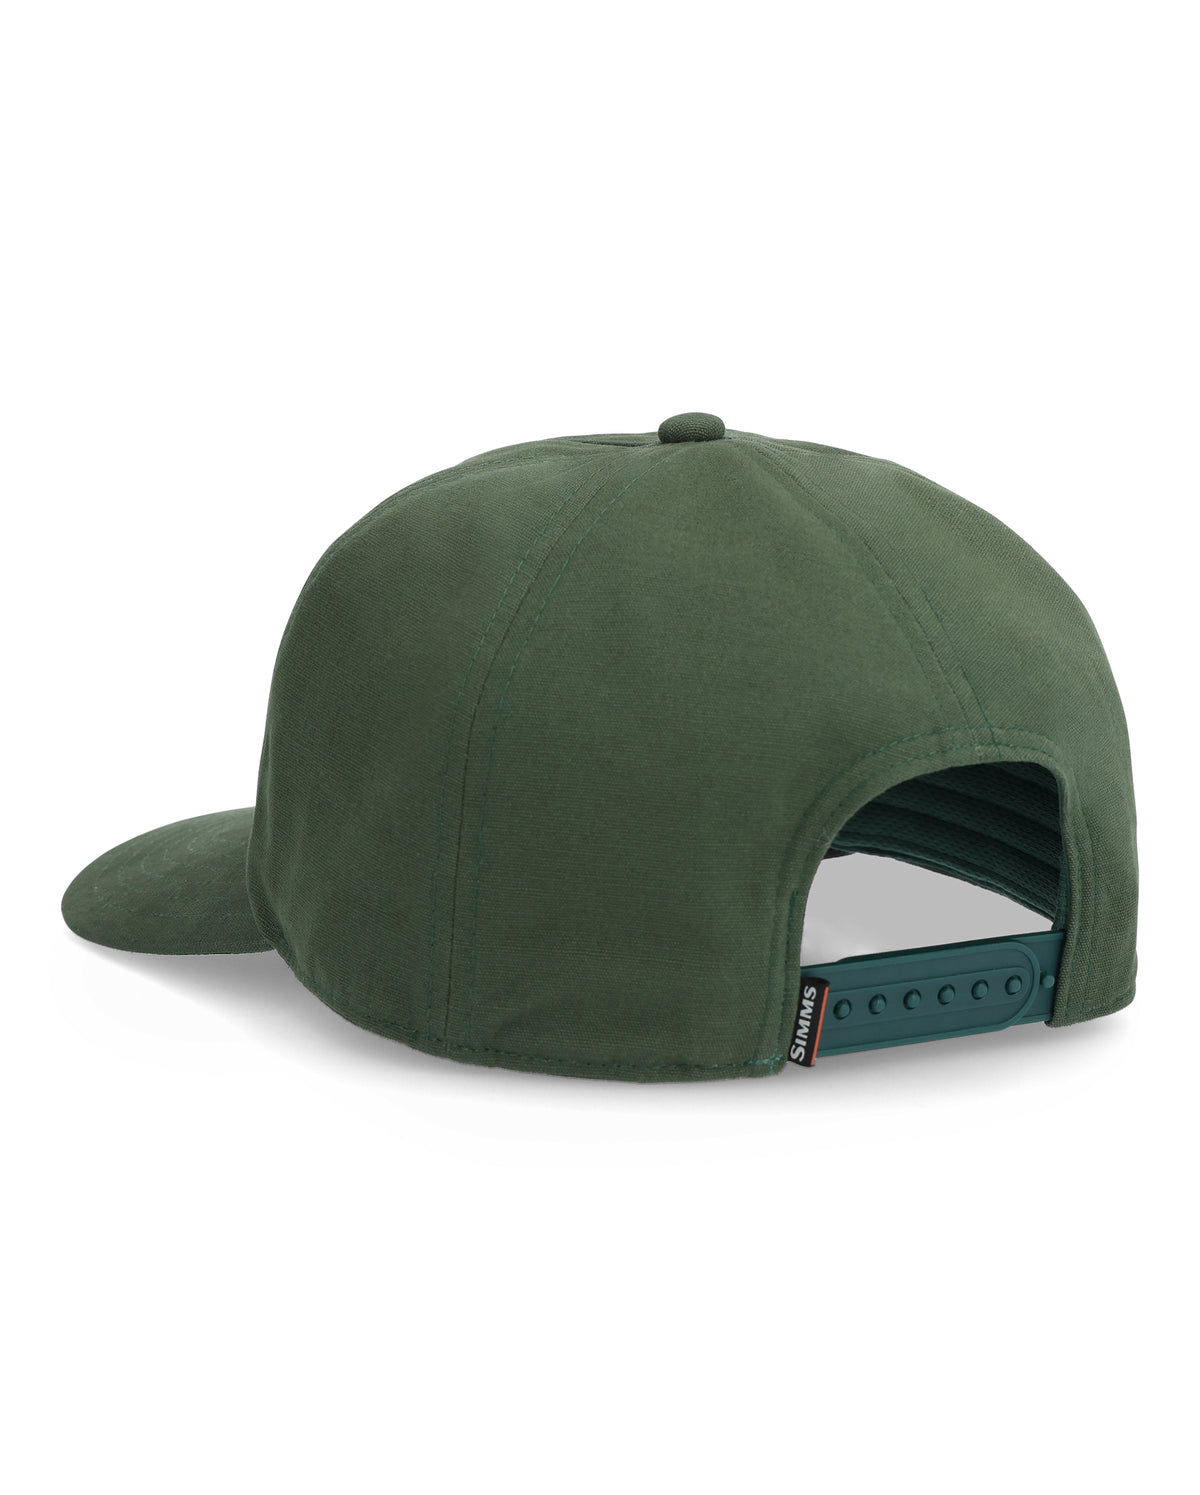 Simms Double Haul Riffle Green Hat